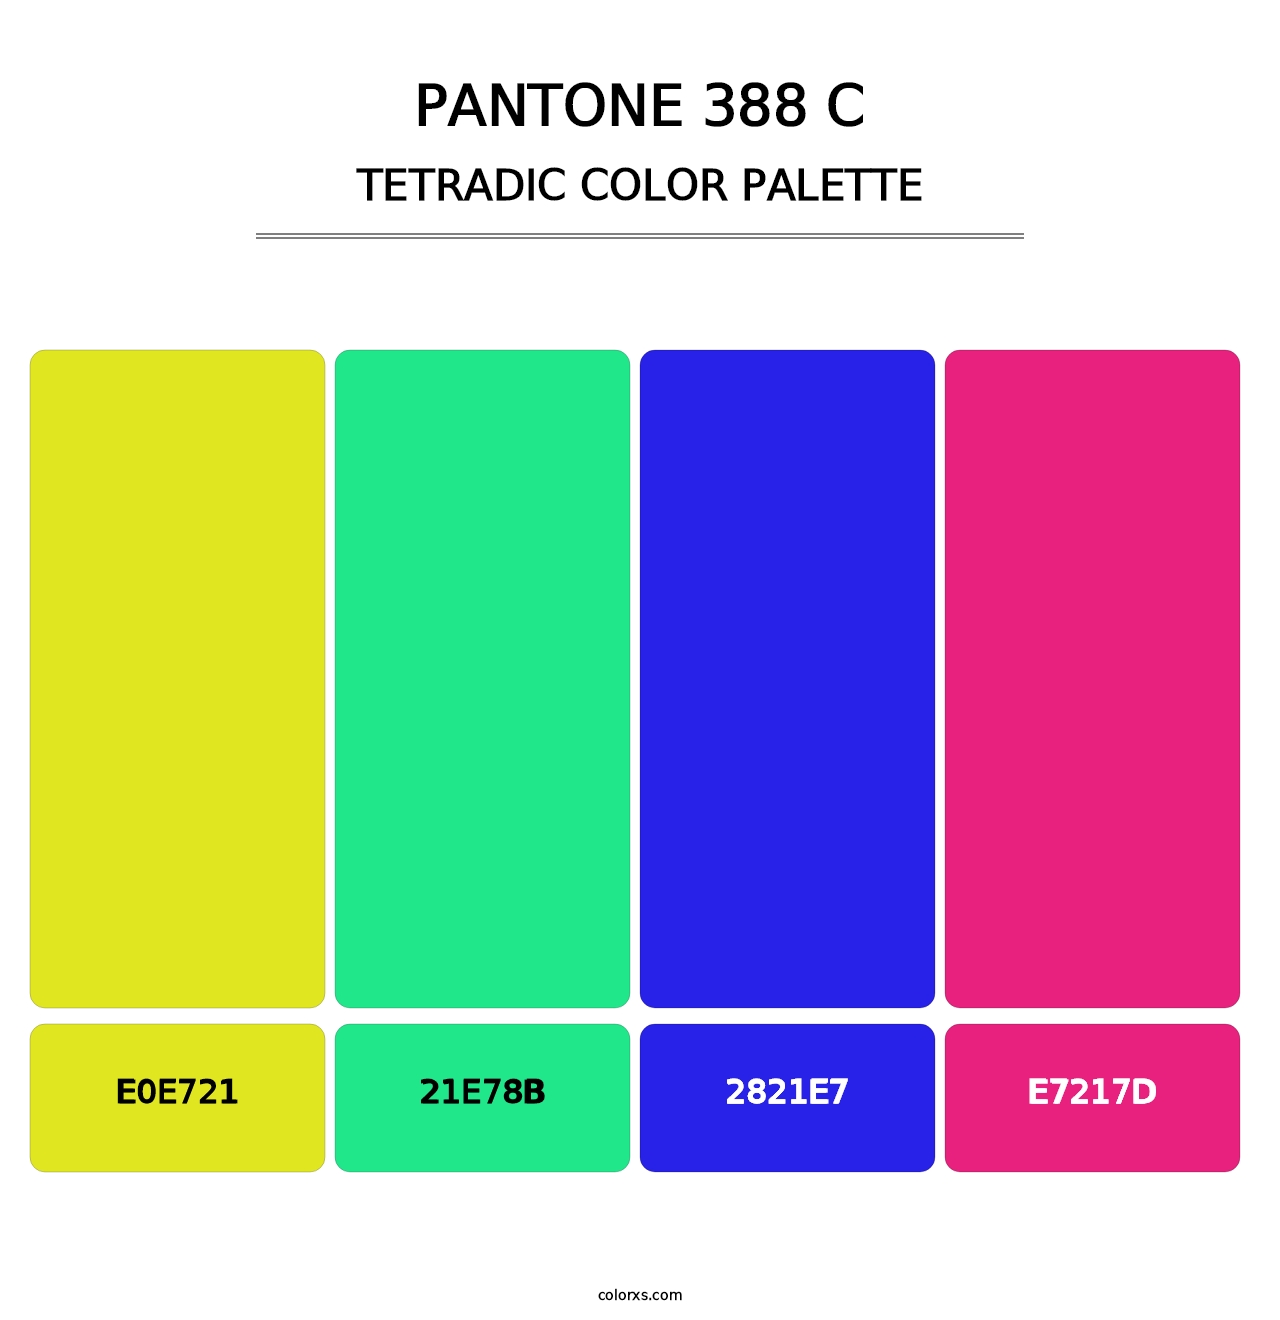 PANTONE 388 C - Tetradic Color Palette